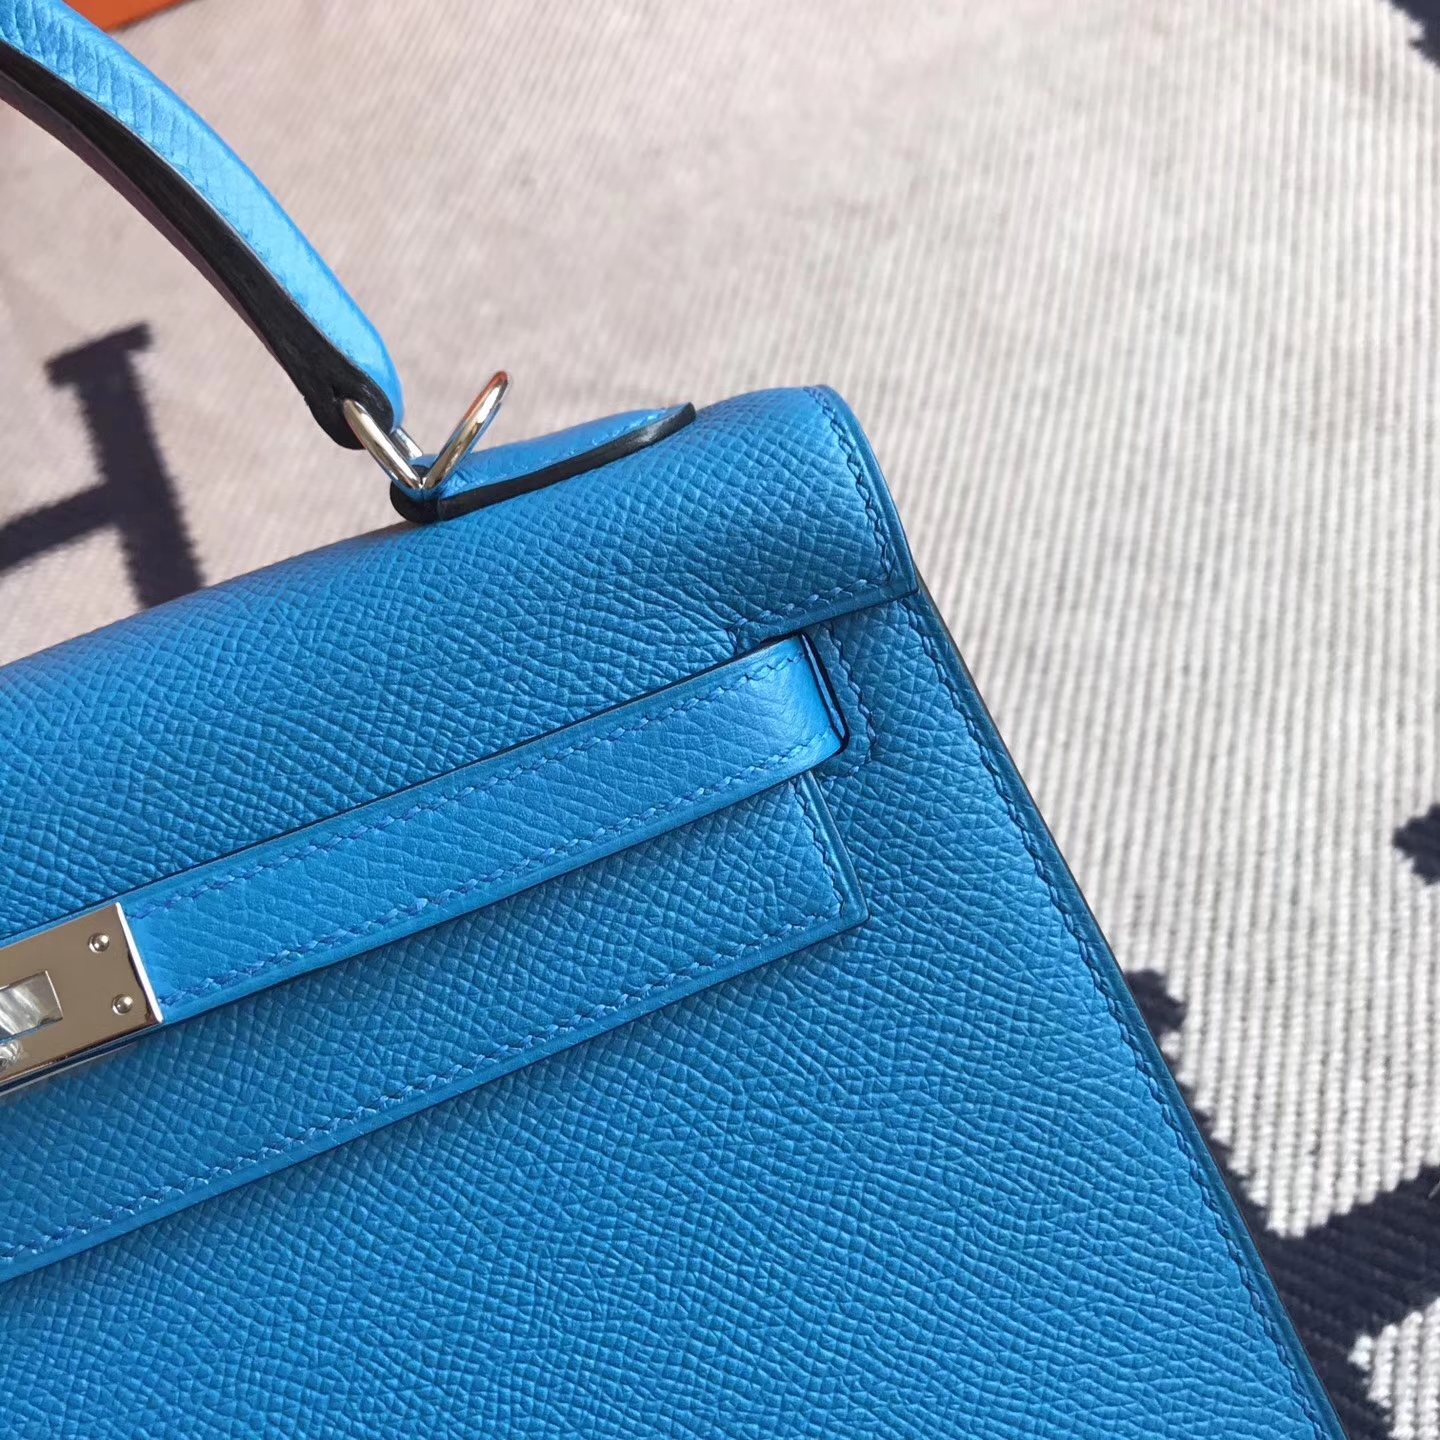 Luxury Hermes Kelly25cm Bag in B3 Blue Zanzibar Epsom Leather Silver Hardware